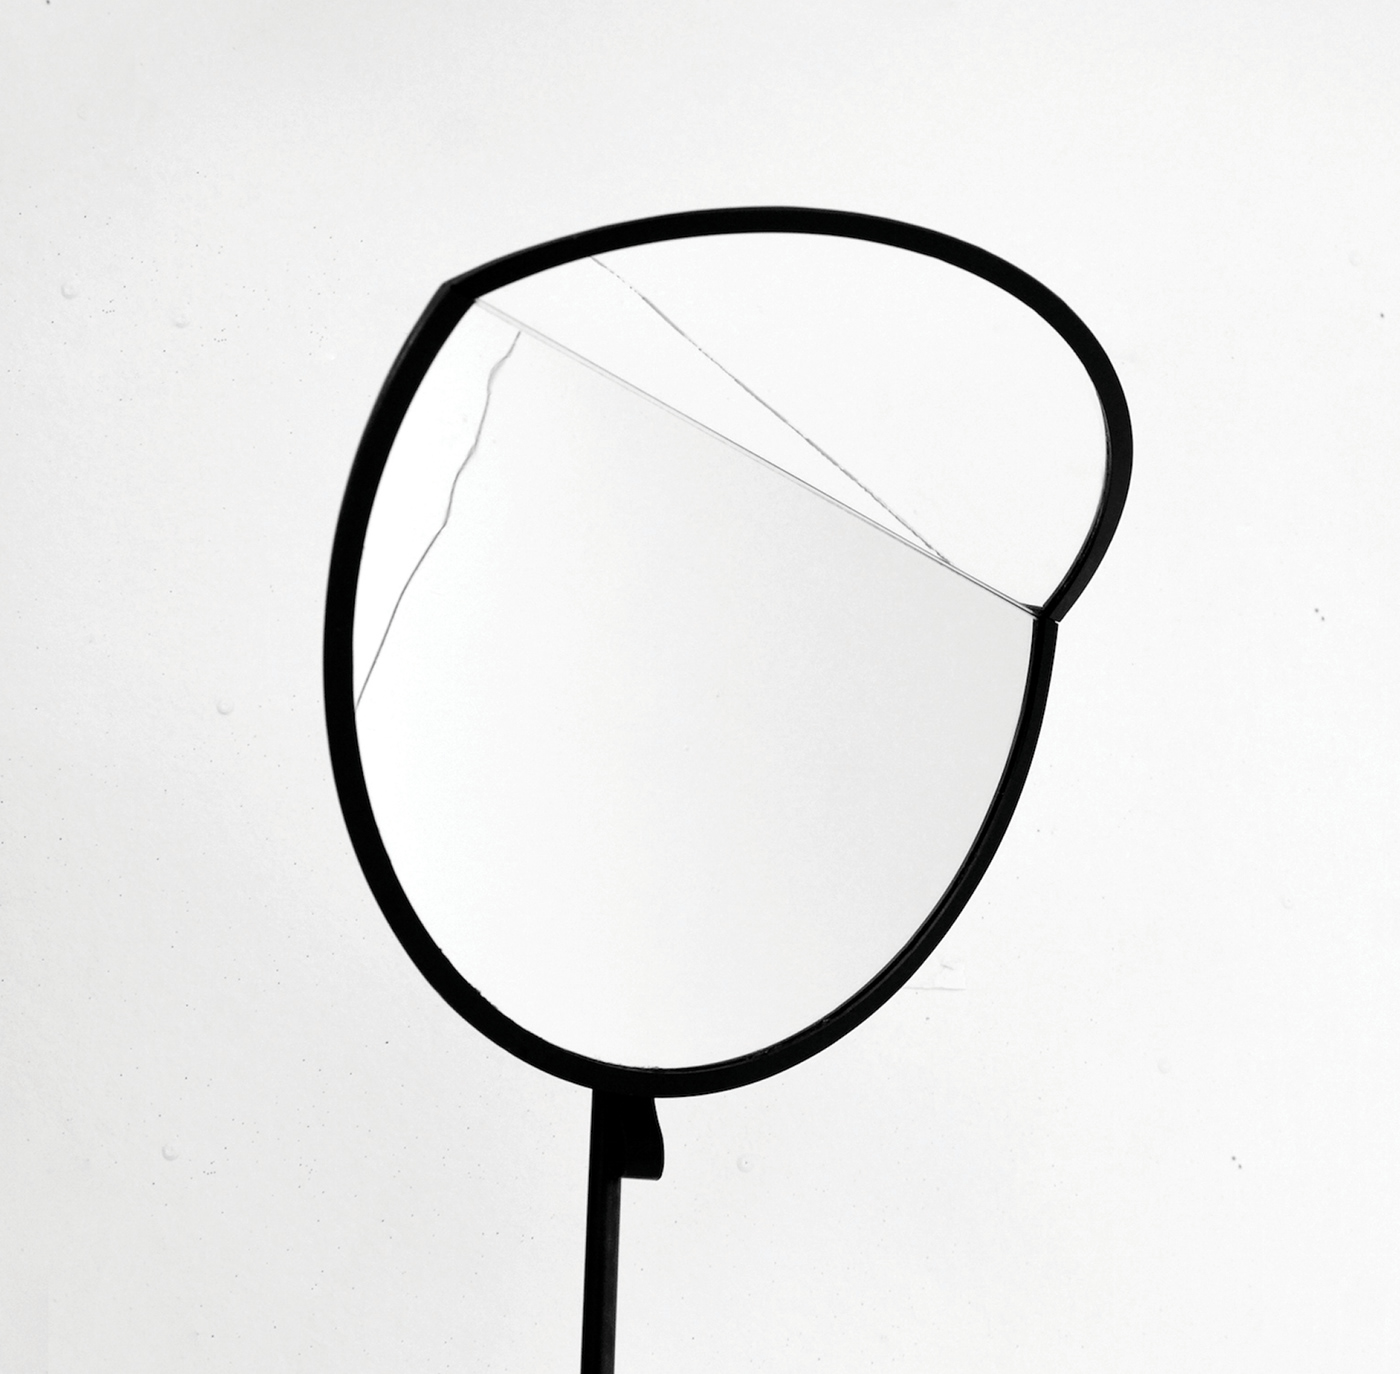 clock mirror designed objects object design